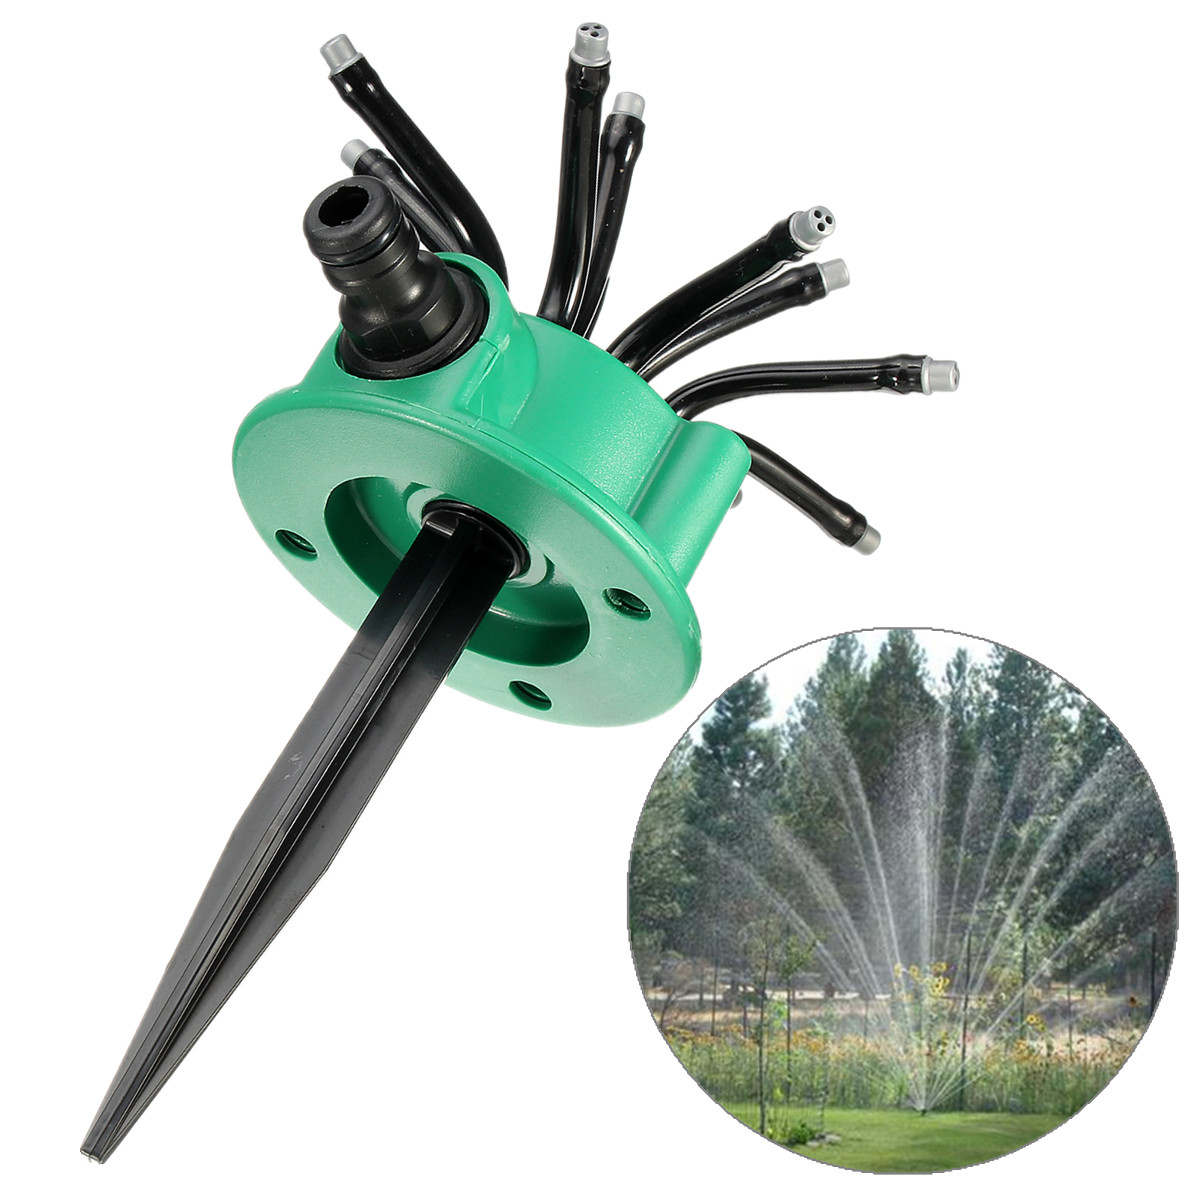 Upgarde-Flexible-Sprayer-Sprinkler-Noodlehead-Irrigation-Spray-Lawn-Garden-Yard-Watering-with-Stand-1545616-2